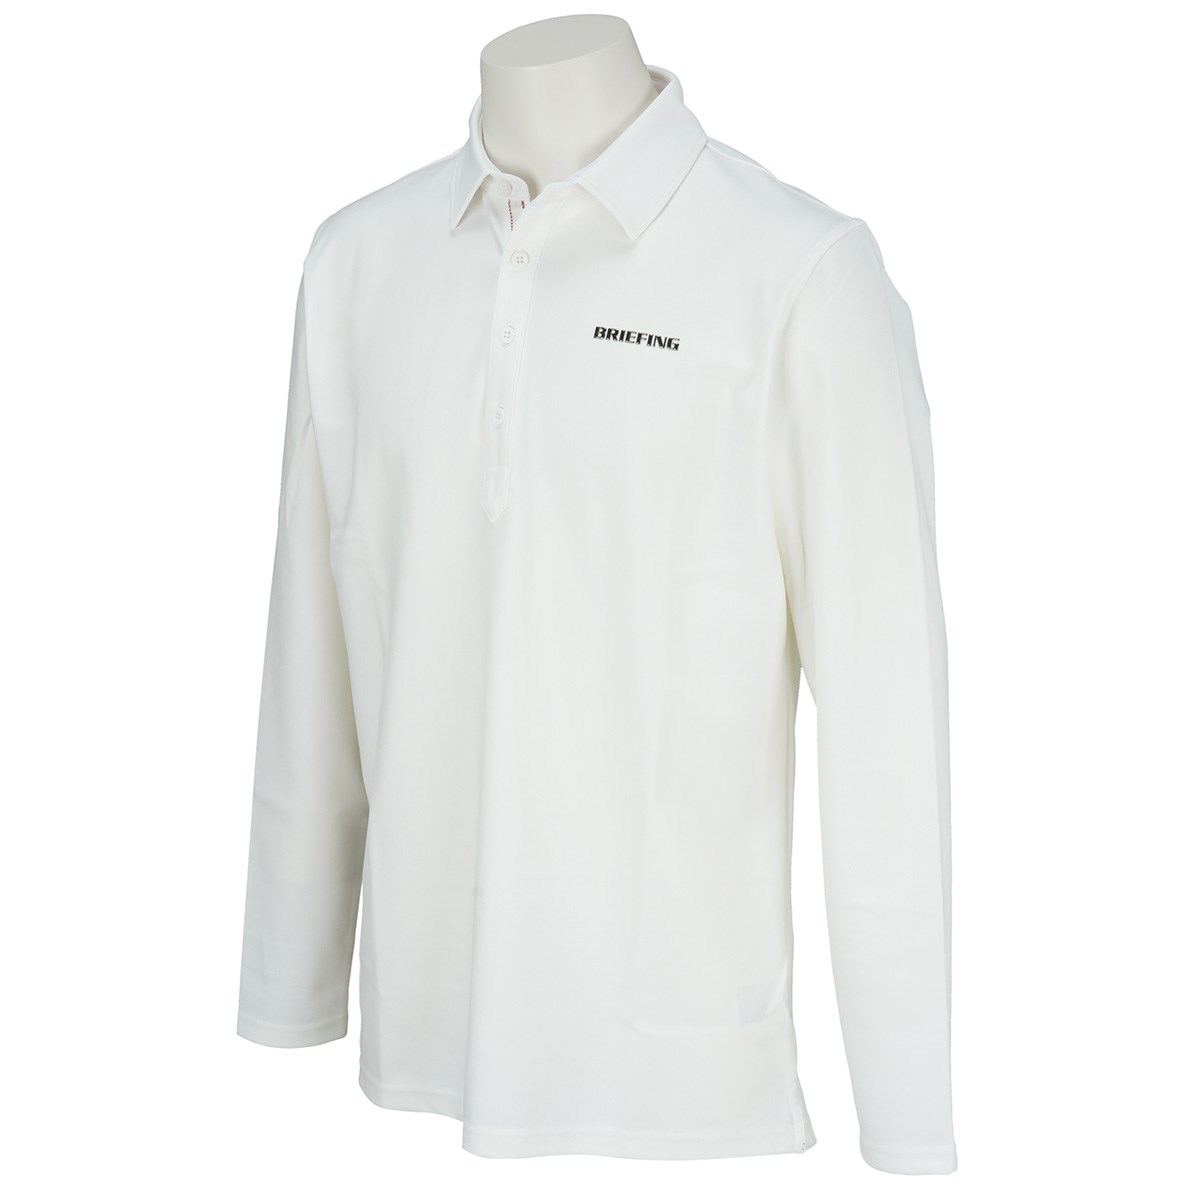 dショッピング |ブリーフィング BRIEFING 長袖ポロシャツ M ホワイト